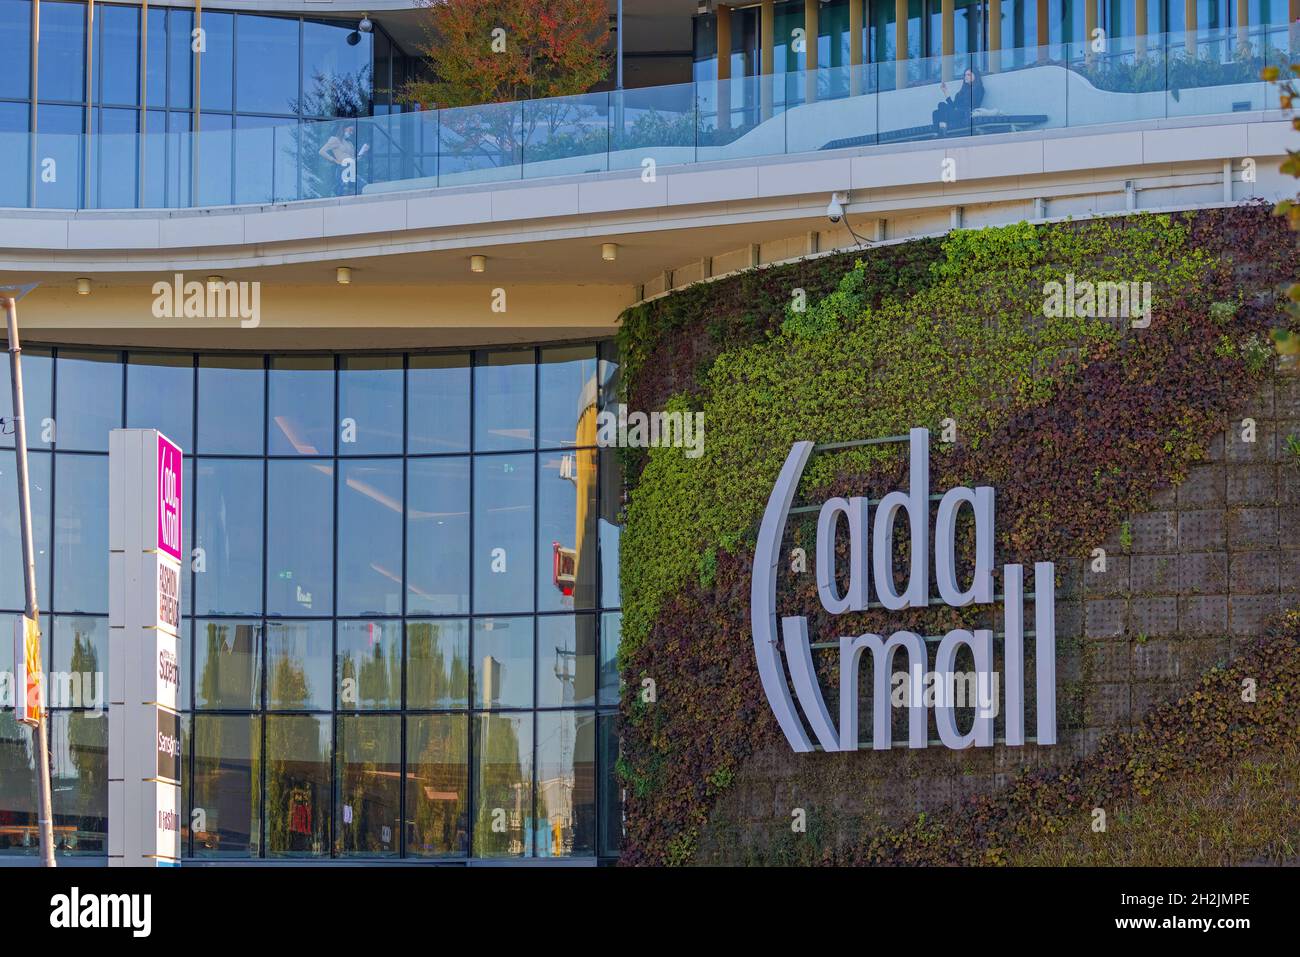 Belgrad, Serbien - 04. Oktober 2021: Vertikale Pflanzenwand im Einkaufszentrum Ada Mall. Stockfoto